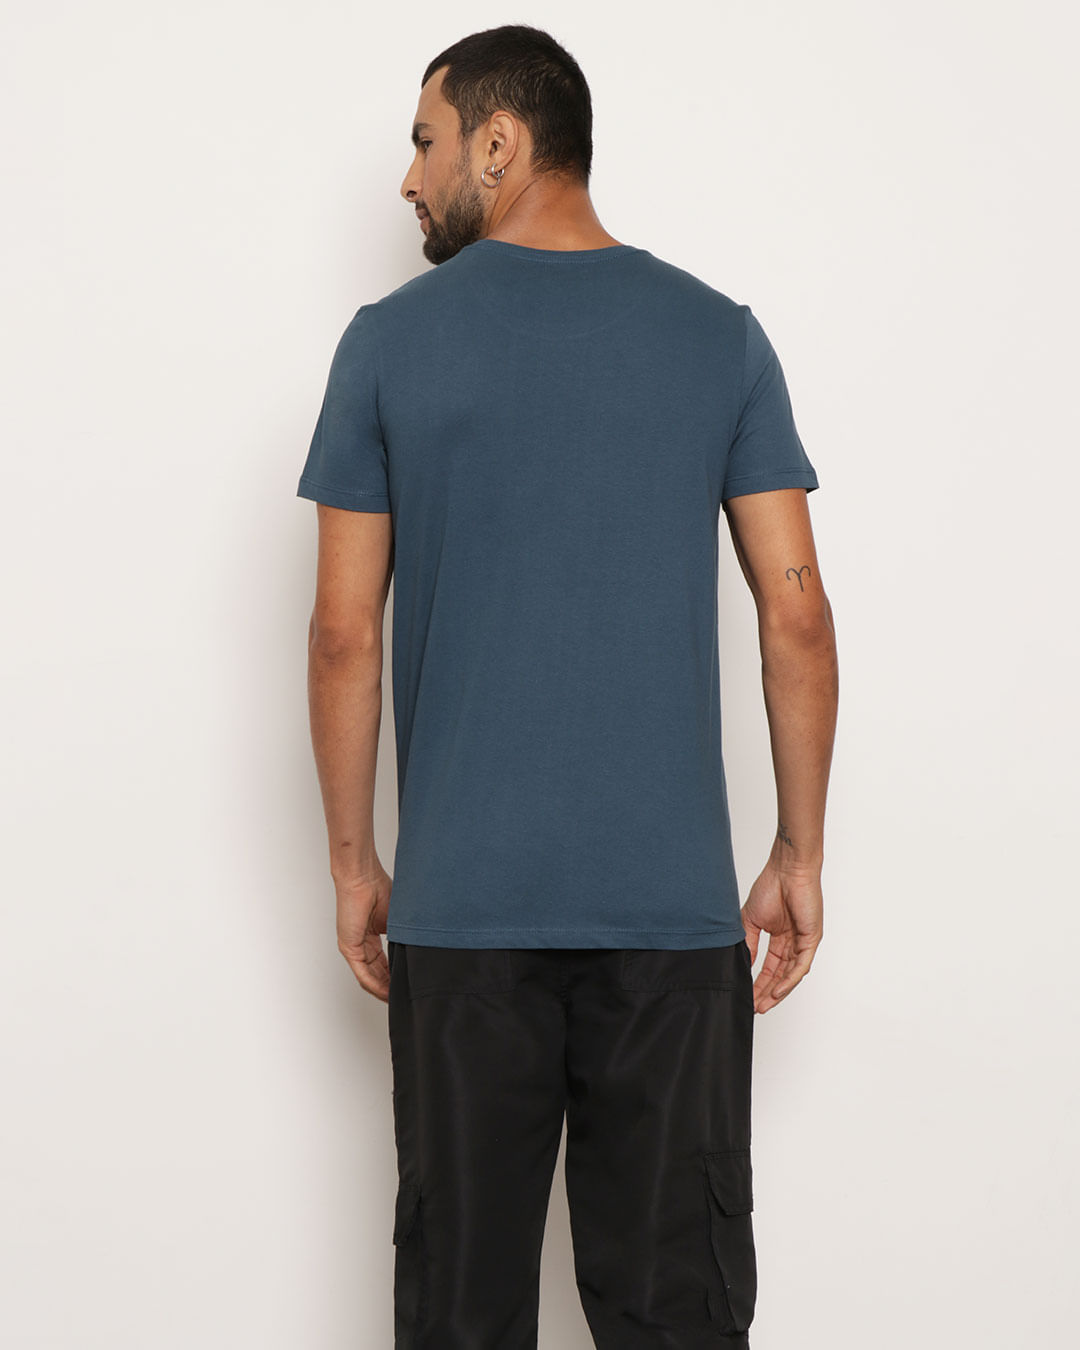 Camiseta--900612-Est-Frente-Pgg---Azul-Escuro